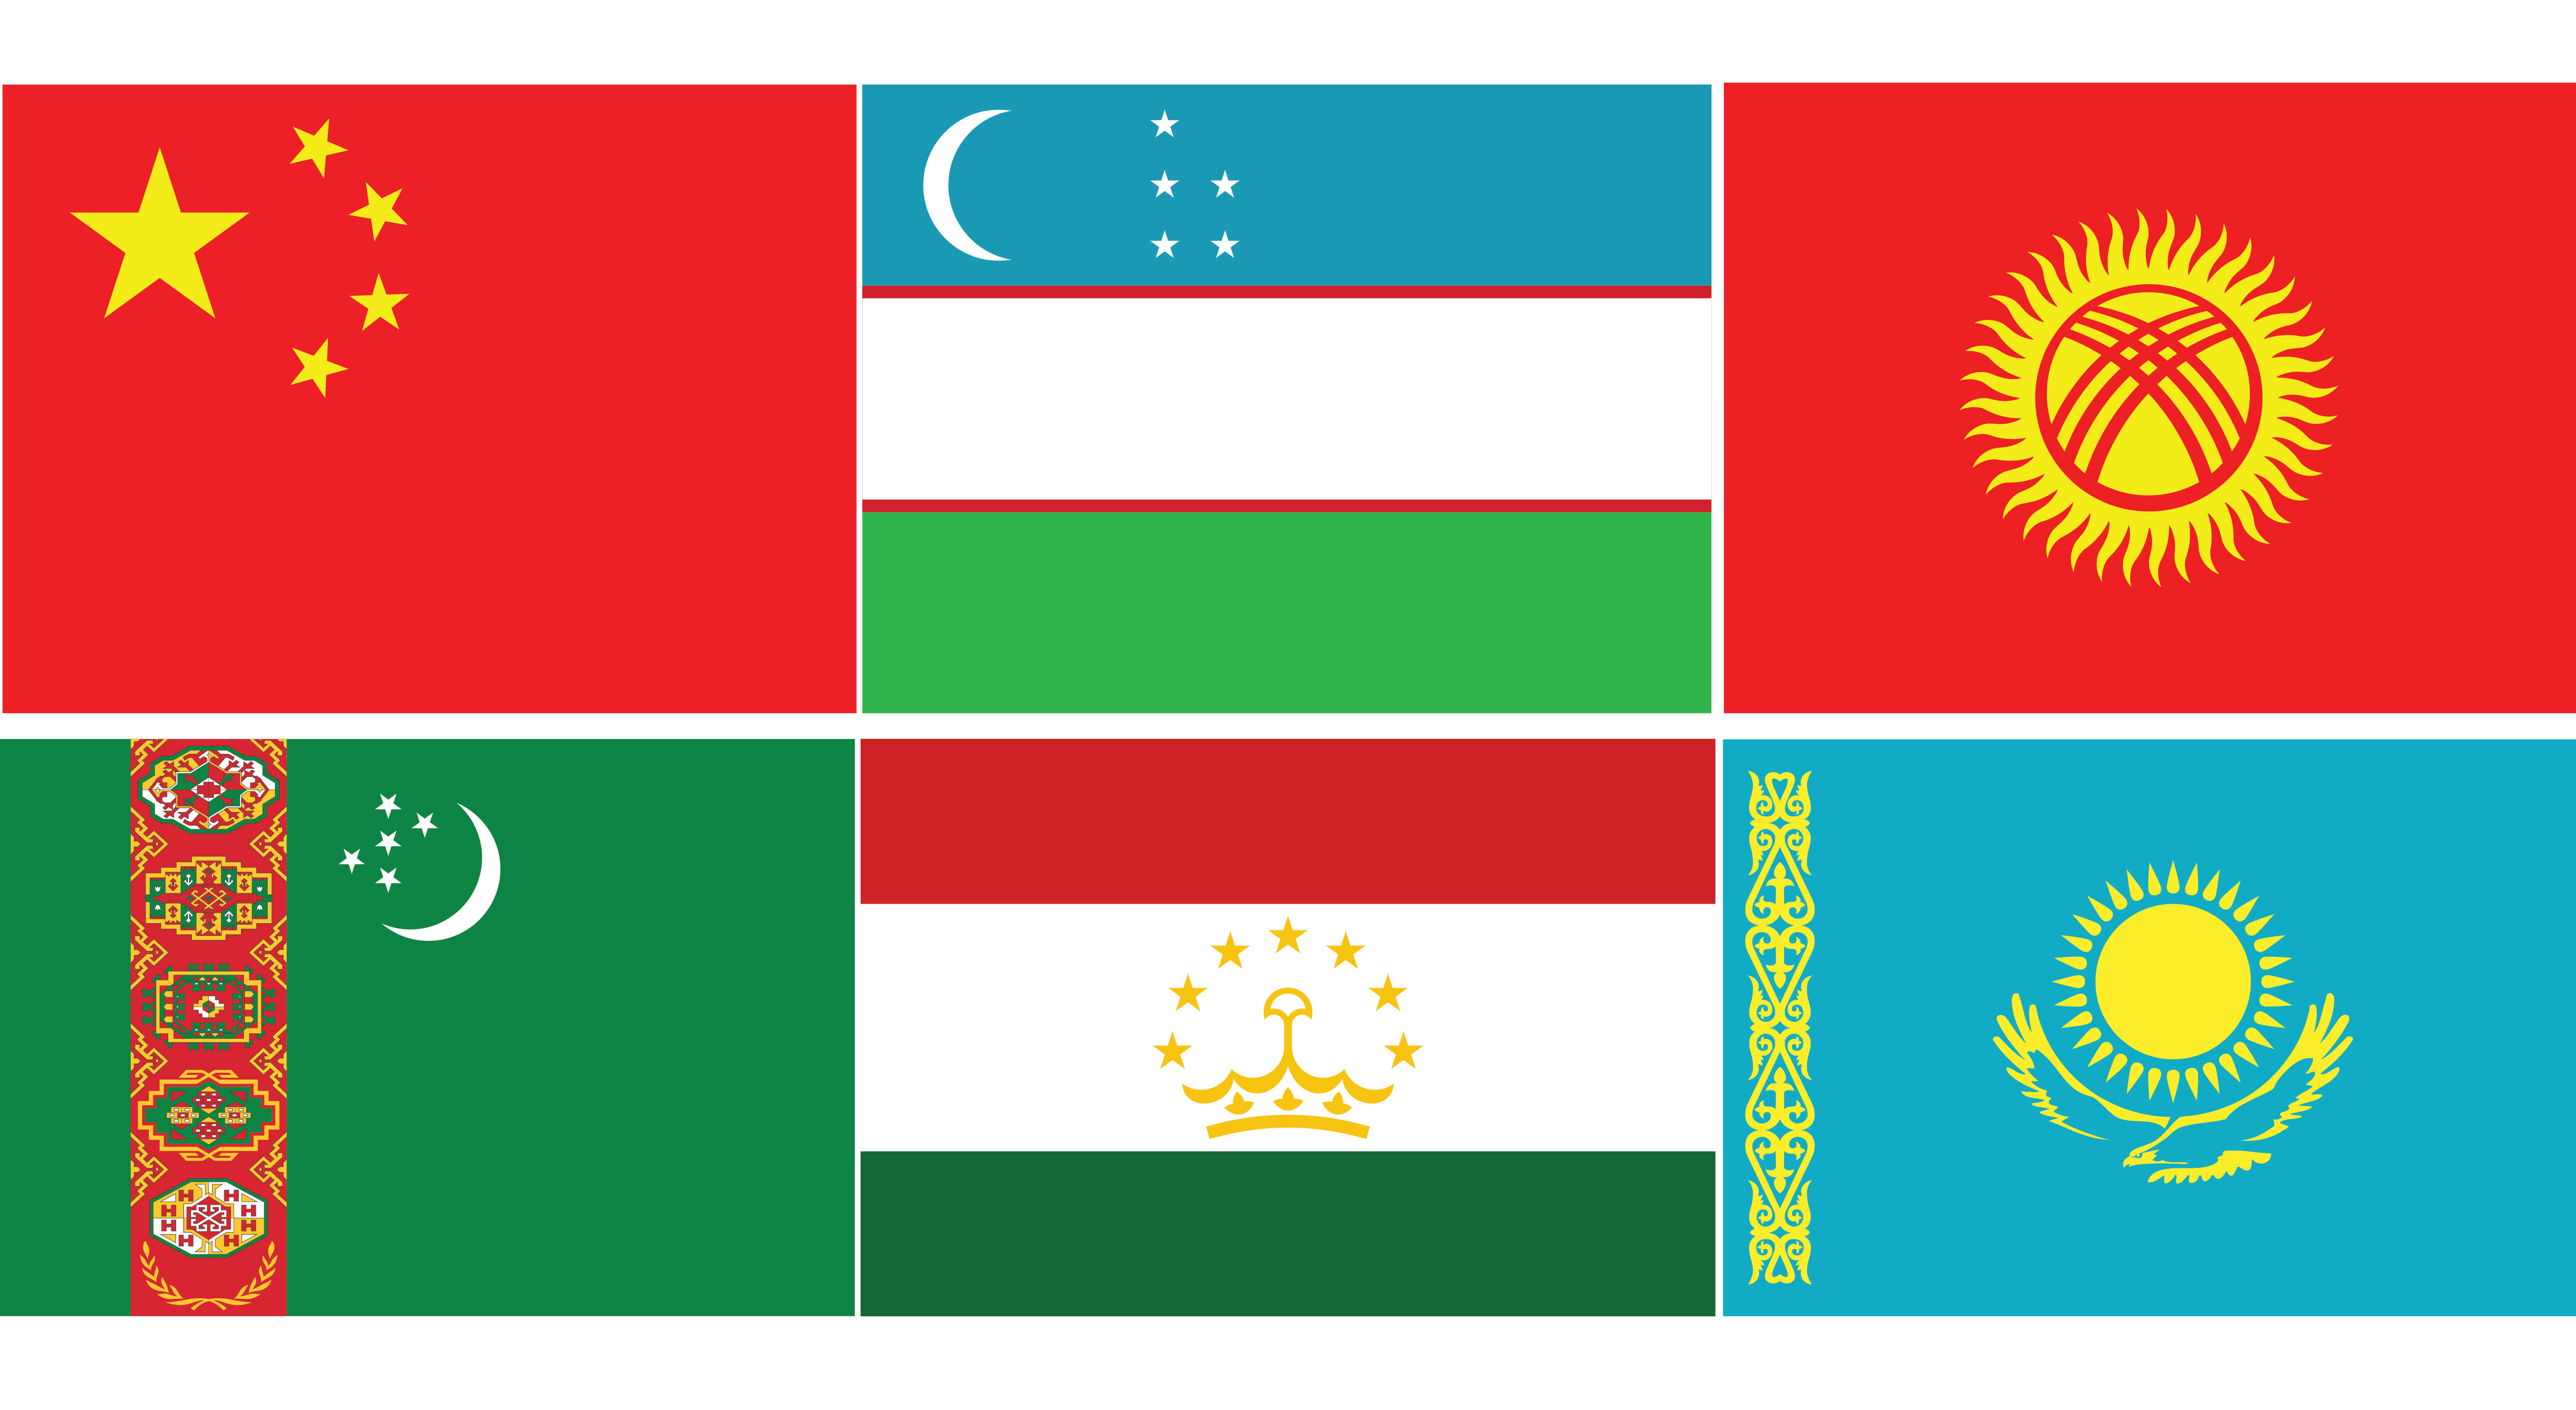 Flags of China, Uzbekistan, Kyrgyzstan, Turkmenistan, Tajikistan, and Kazakhstan in one frame